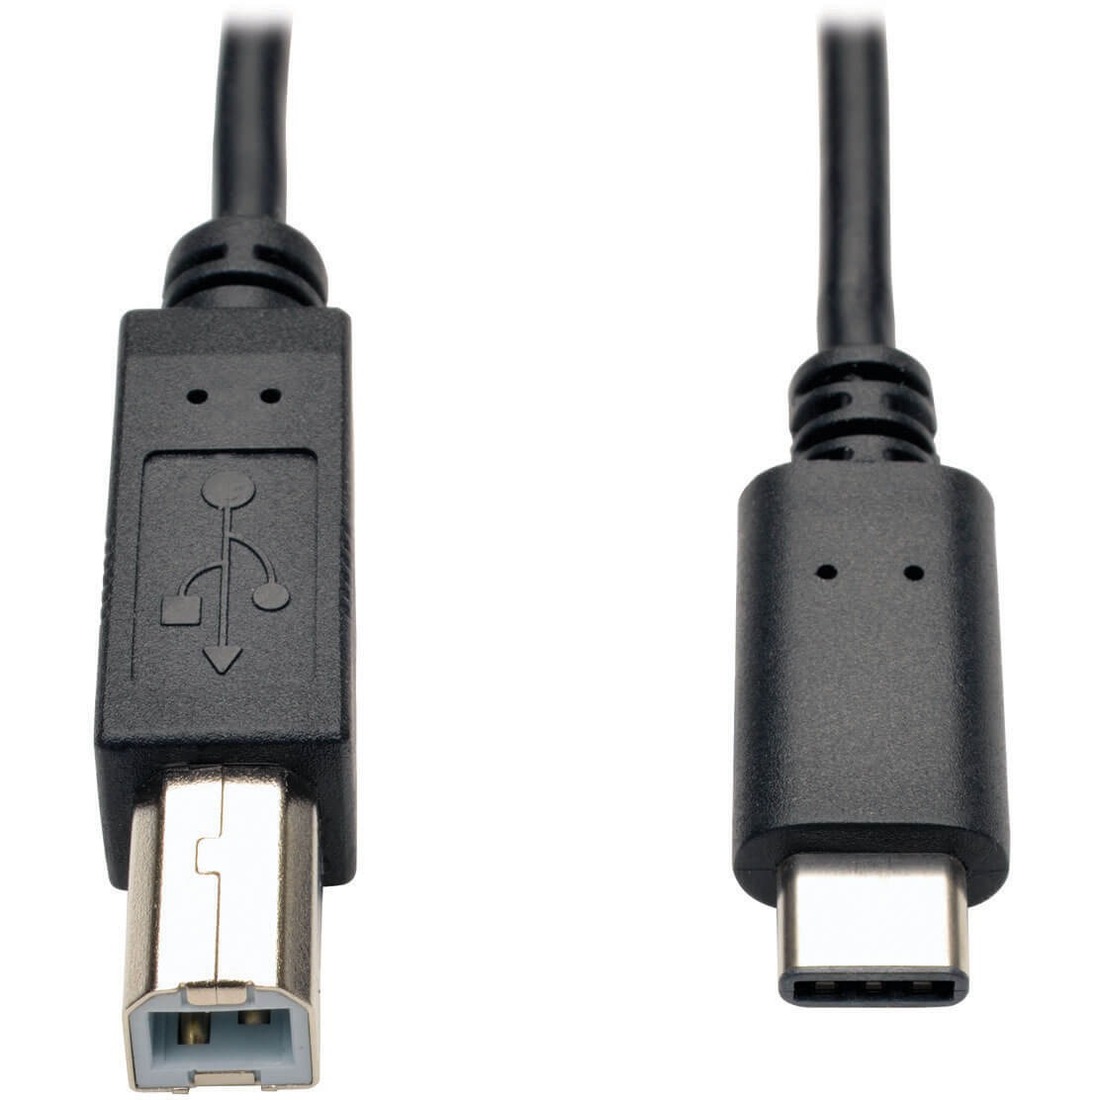 2.0, Type-c 1.0 Reversible Connector, USB on-the-go. Type USB 2. 0 Hi Speed. Провод Tripp Lite на USB. USB B USB C. Usb 2.0 high speed